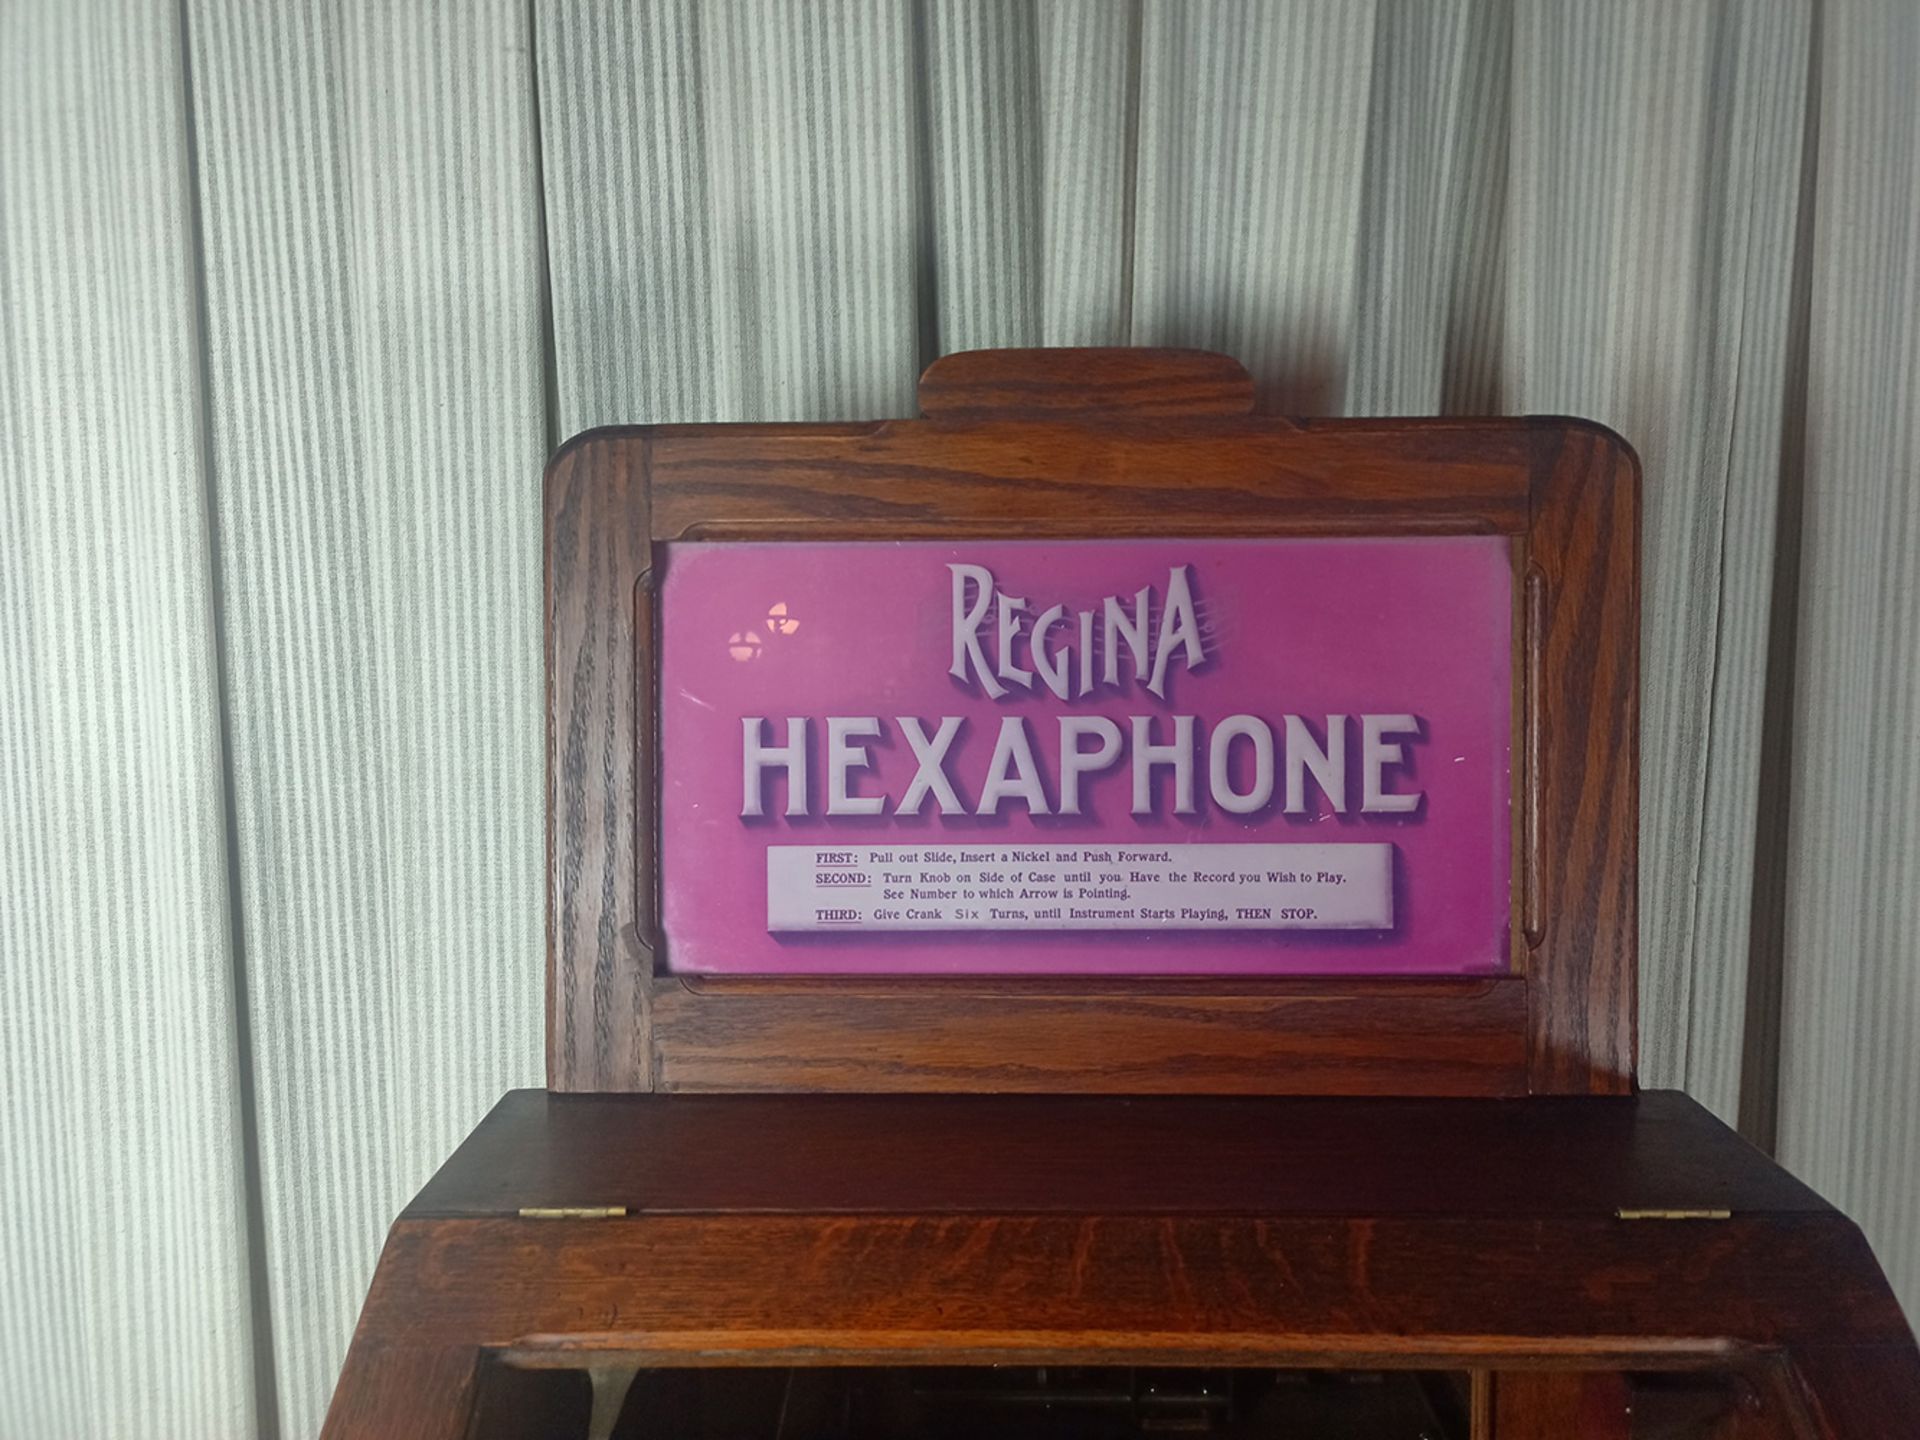 Regina Hexaphone Style 101 Coin-op Phonograph, ca. 1910 - Image 6 of 13